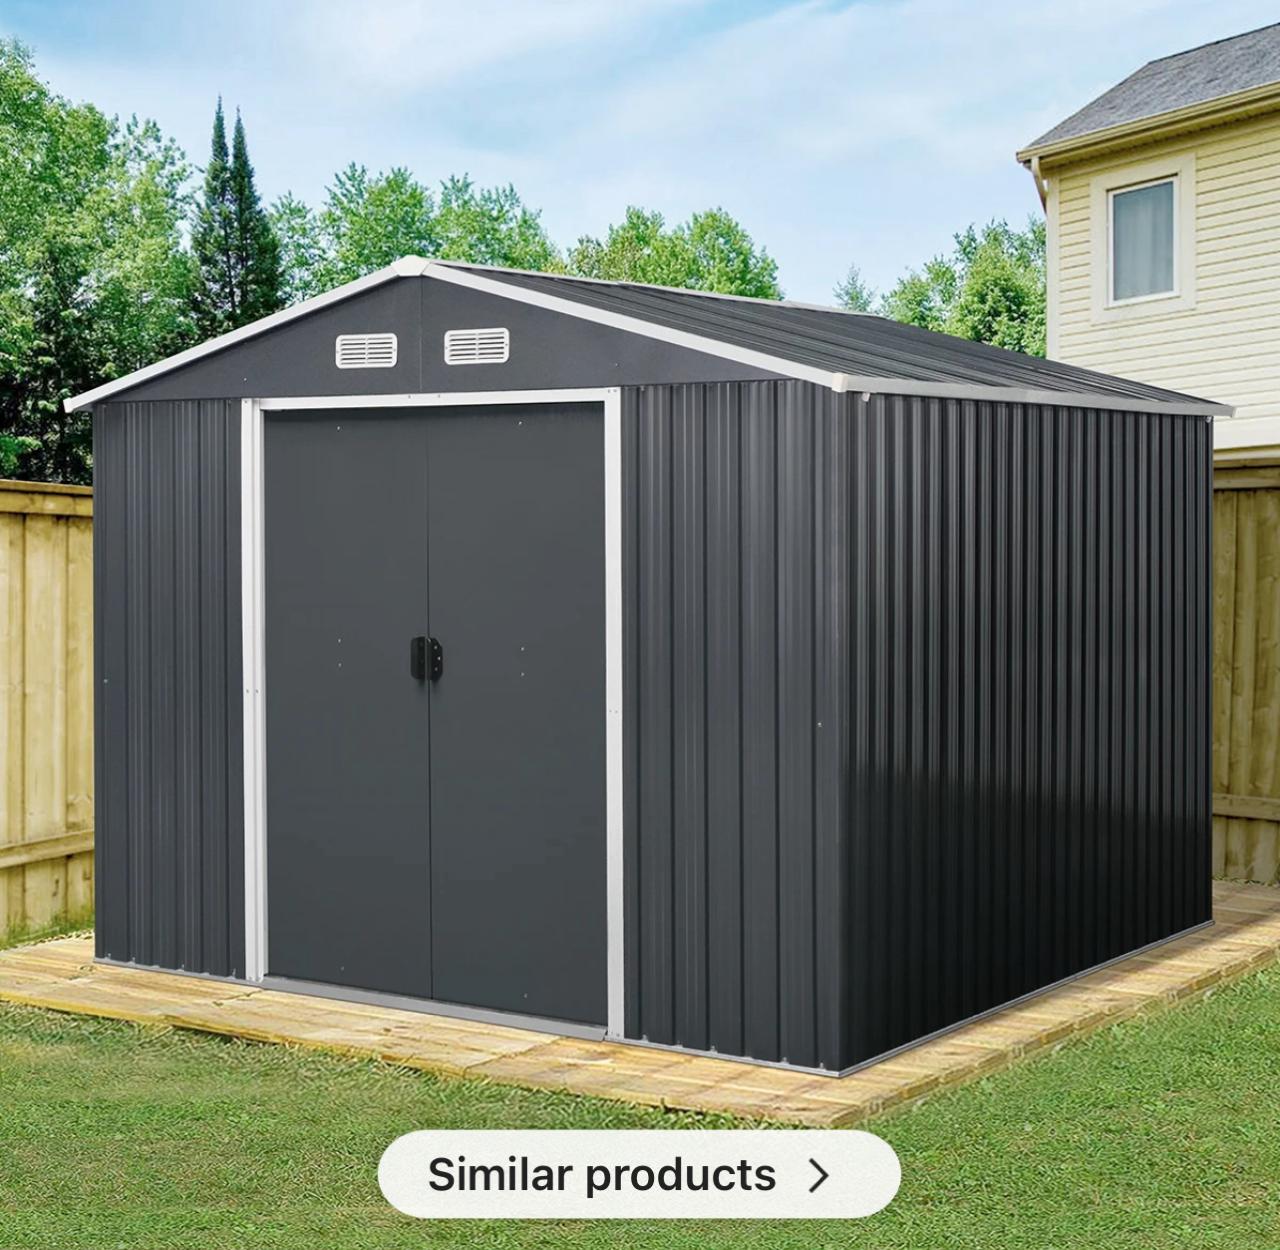 Outdoor Metal Tin Garden Storage Shed For Backyard with lockable doors